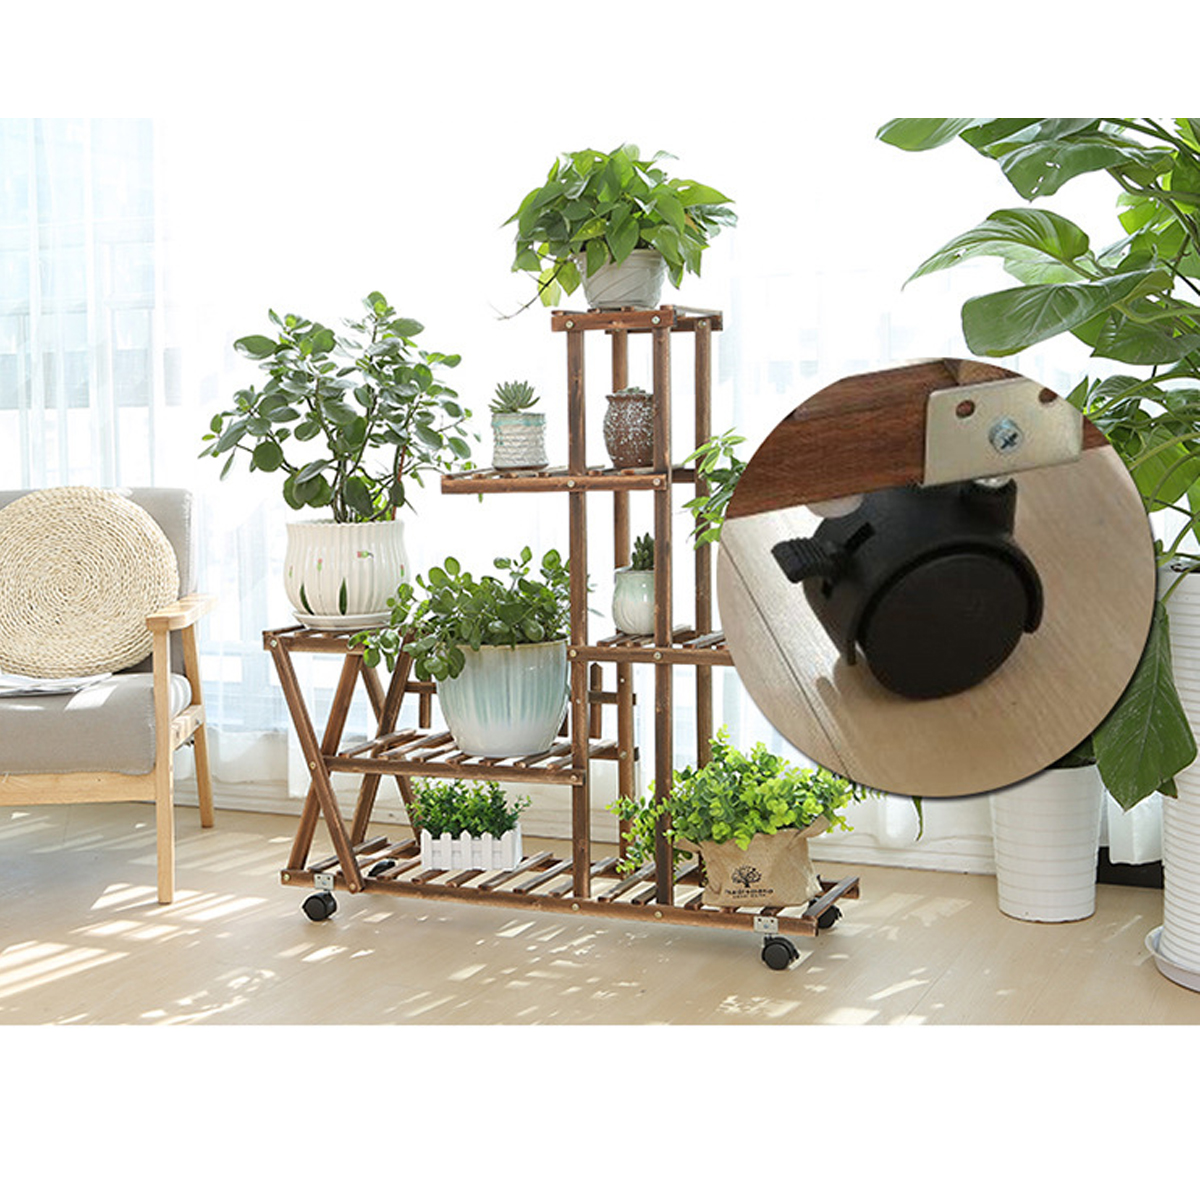 Wooden Plant Flower Pot Stand Shelf Indoor Outdoor Garden Planter With Wheels 7